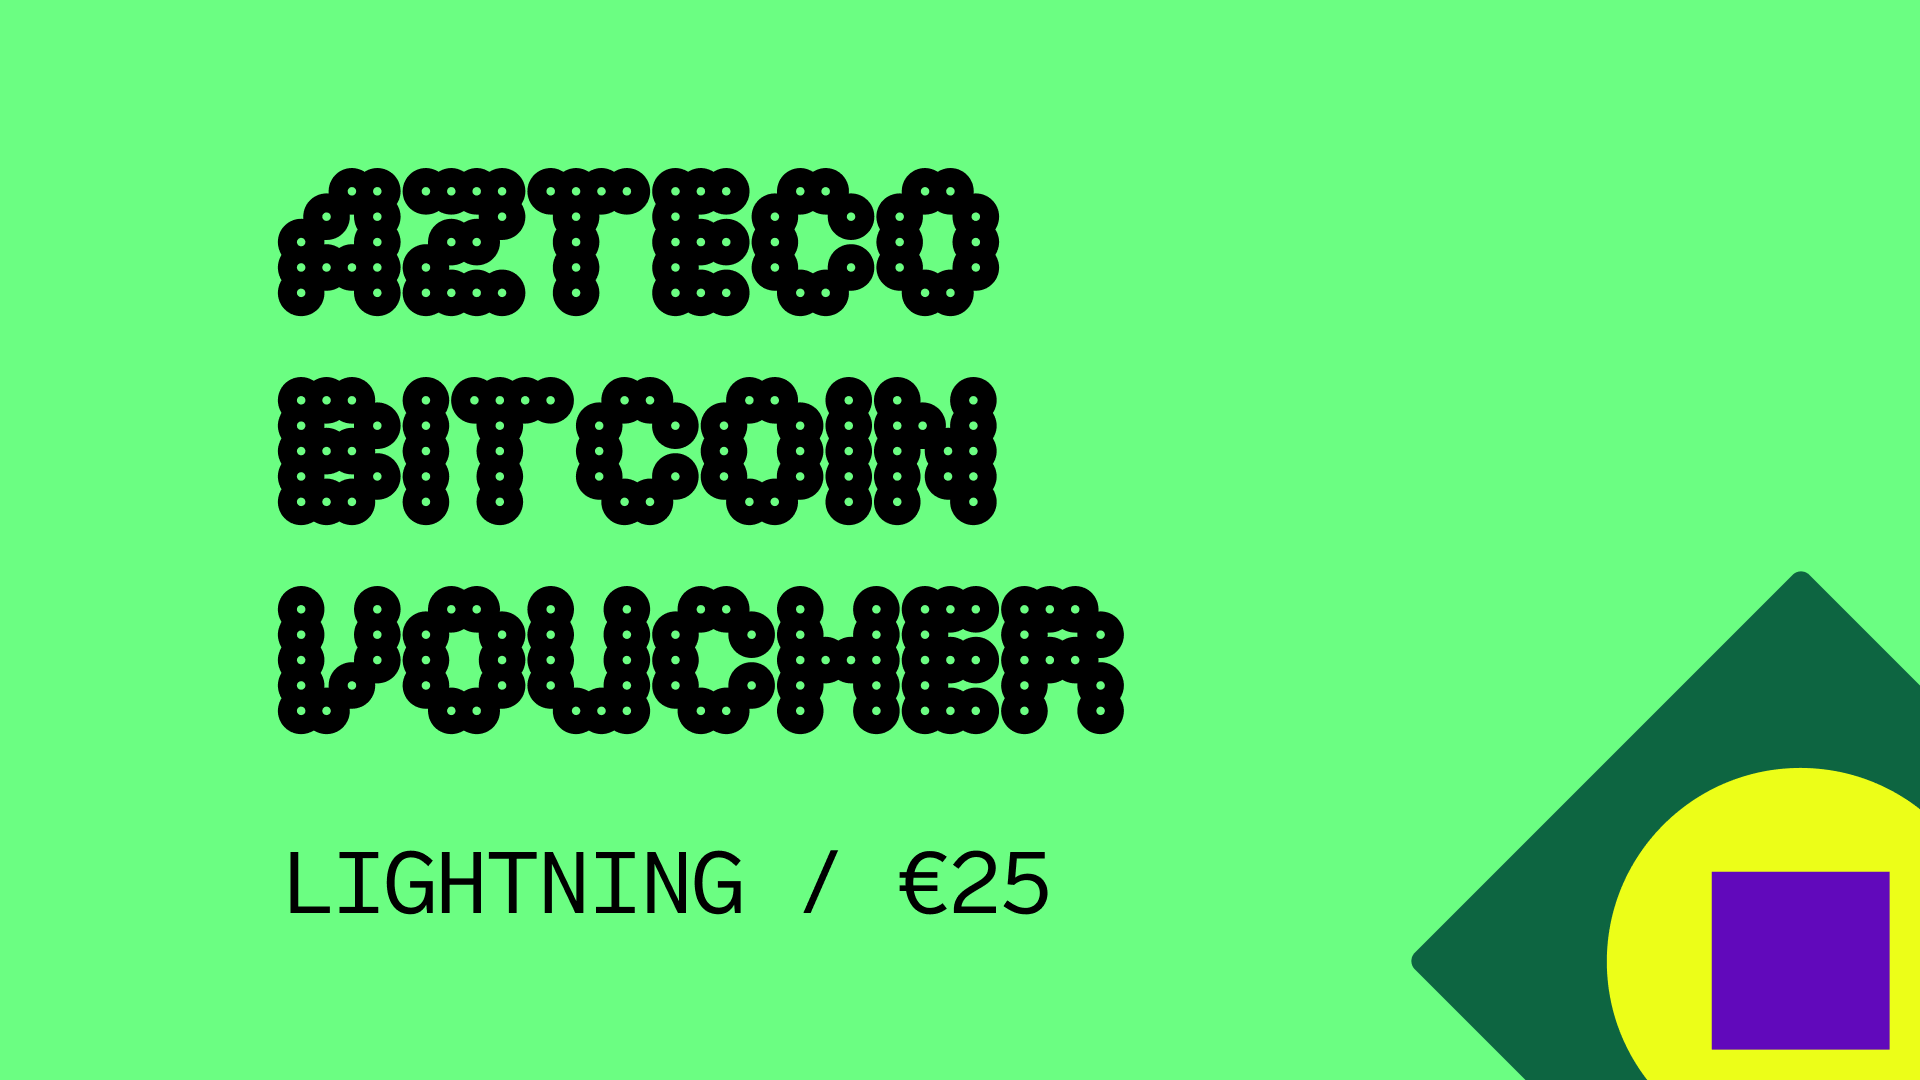 Azteco Bitcoin Lighting €25 Voucher (28.25$)